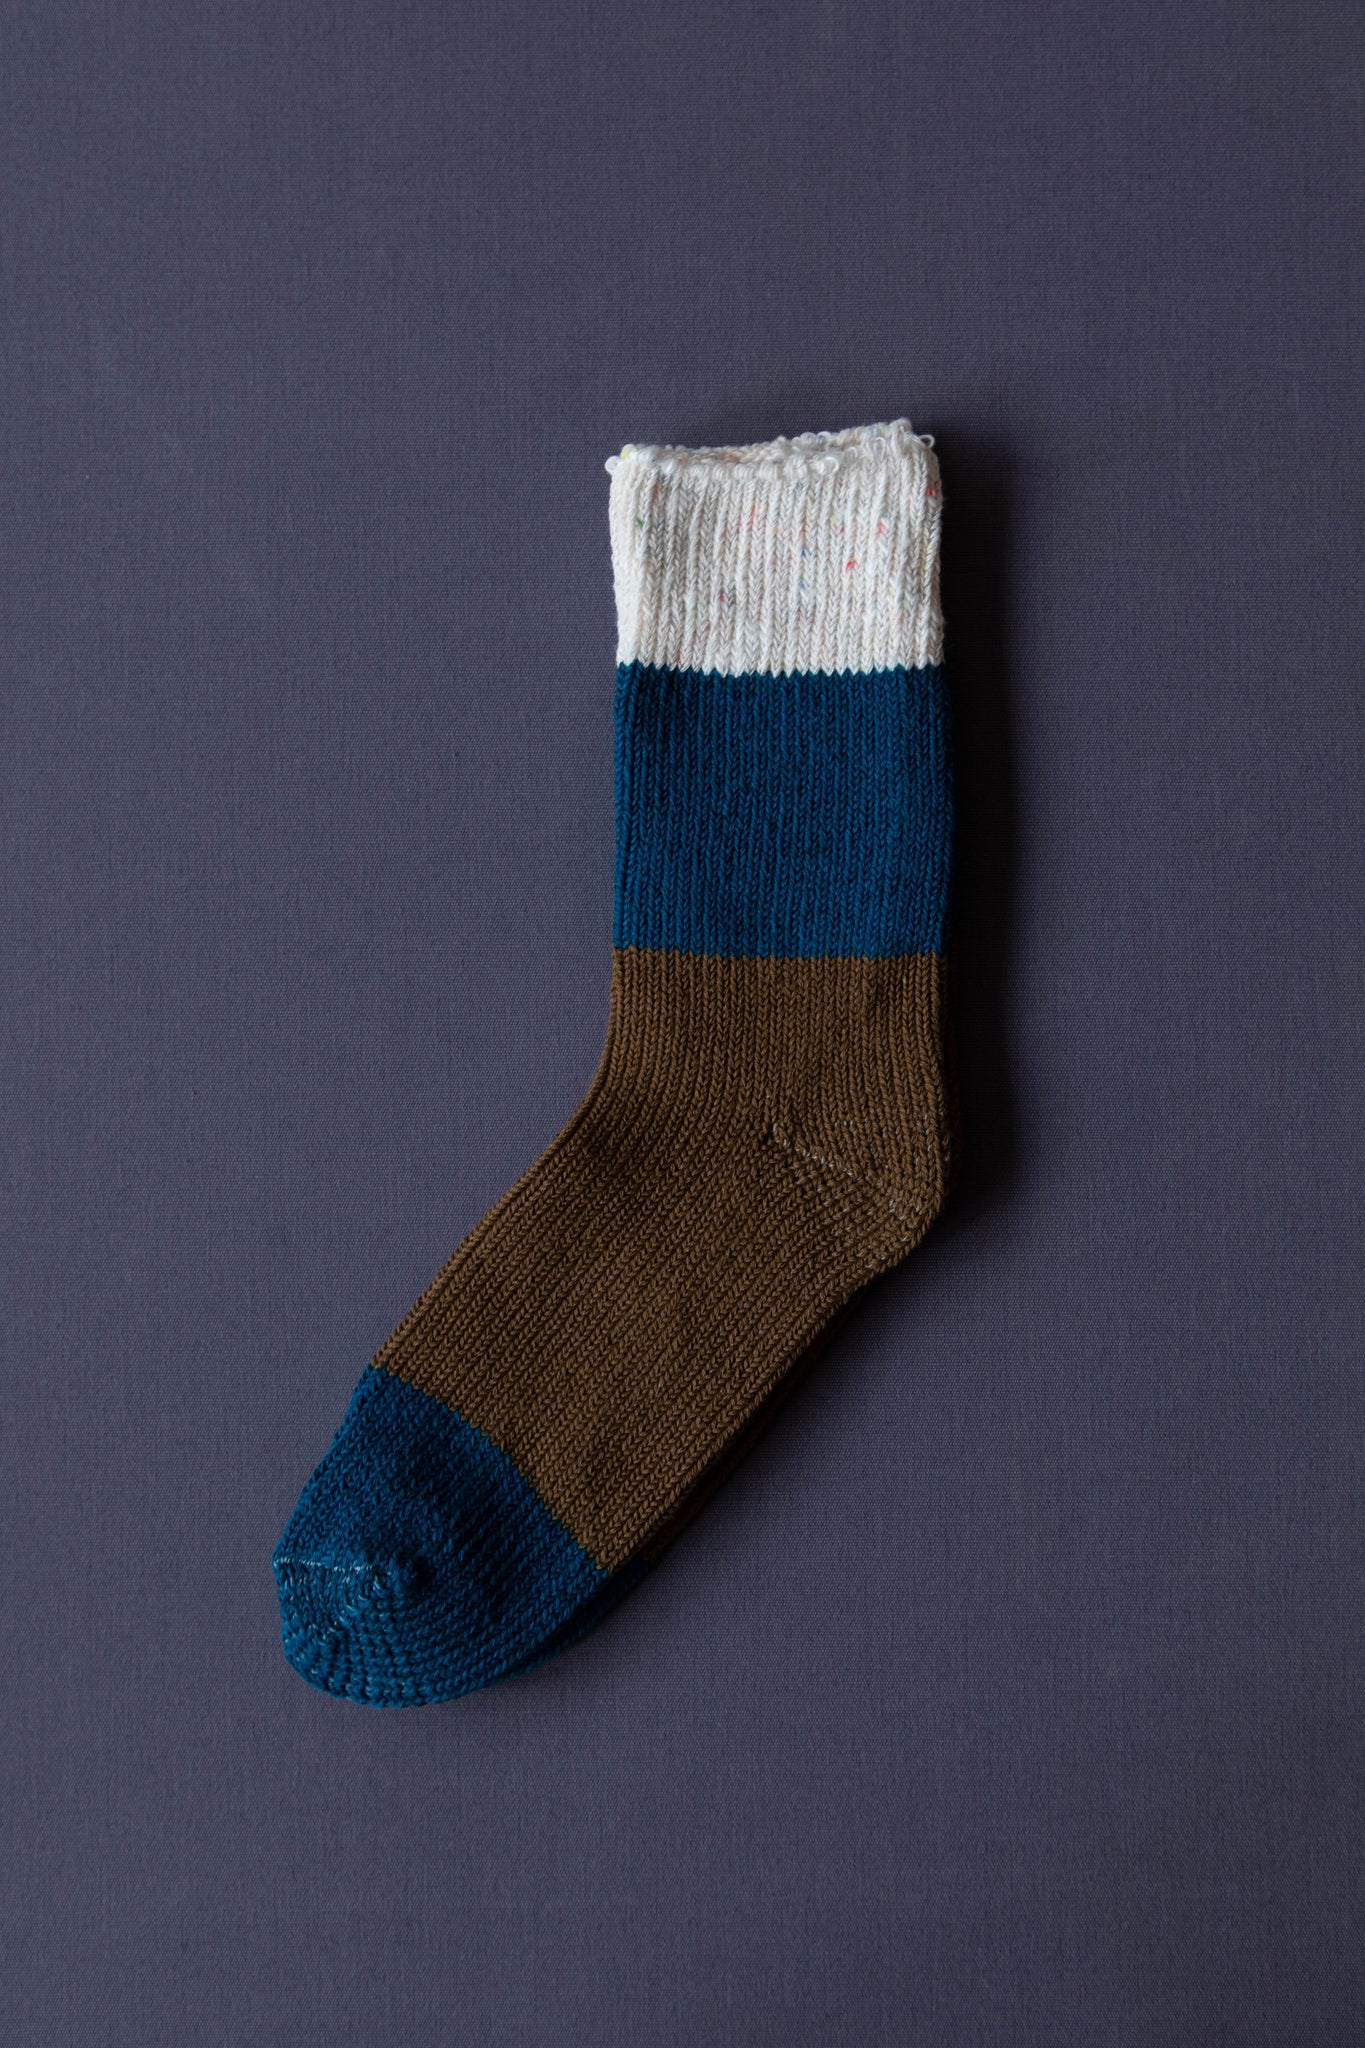 Aseedonclöud | Socks in Confetti & Teal